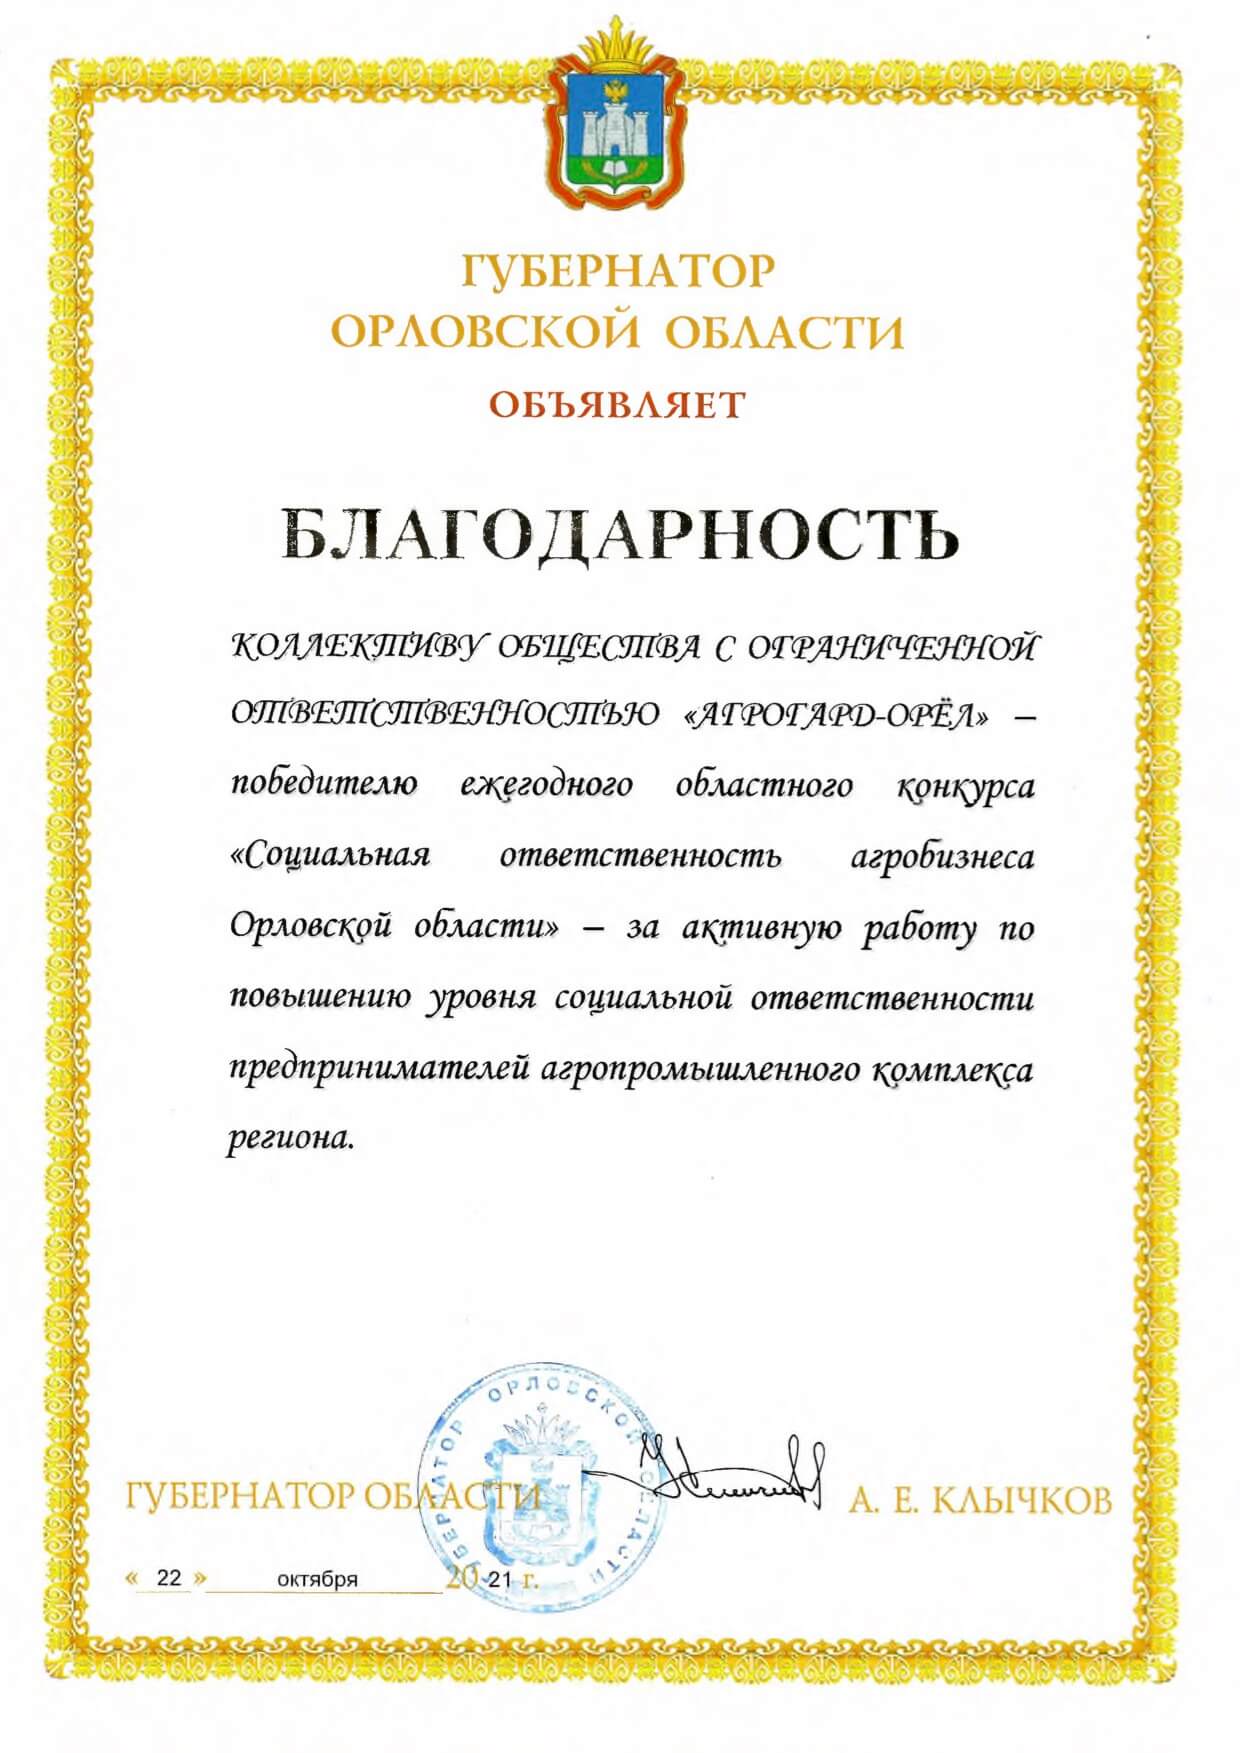 Губернатором Орловской области объявлена благодарность коллективу ООО АгроГард-Орел